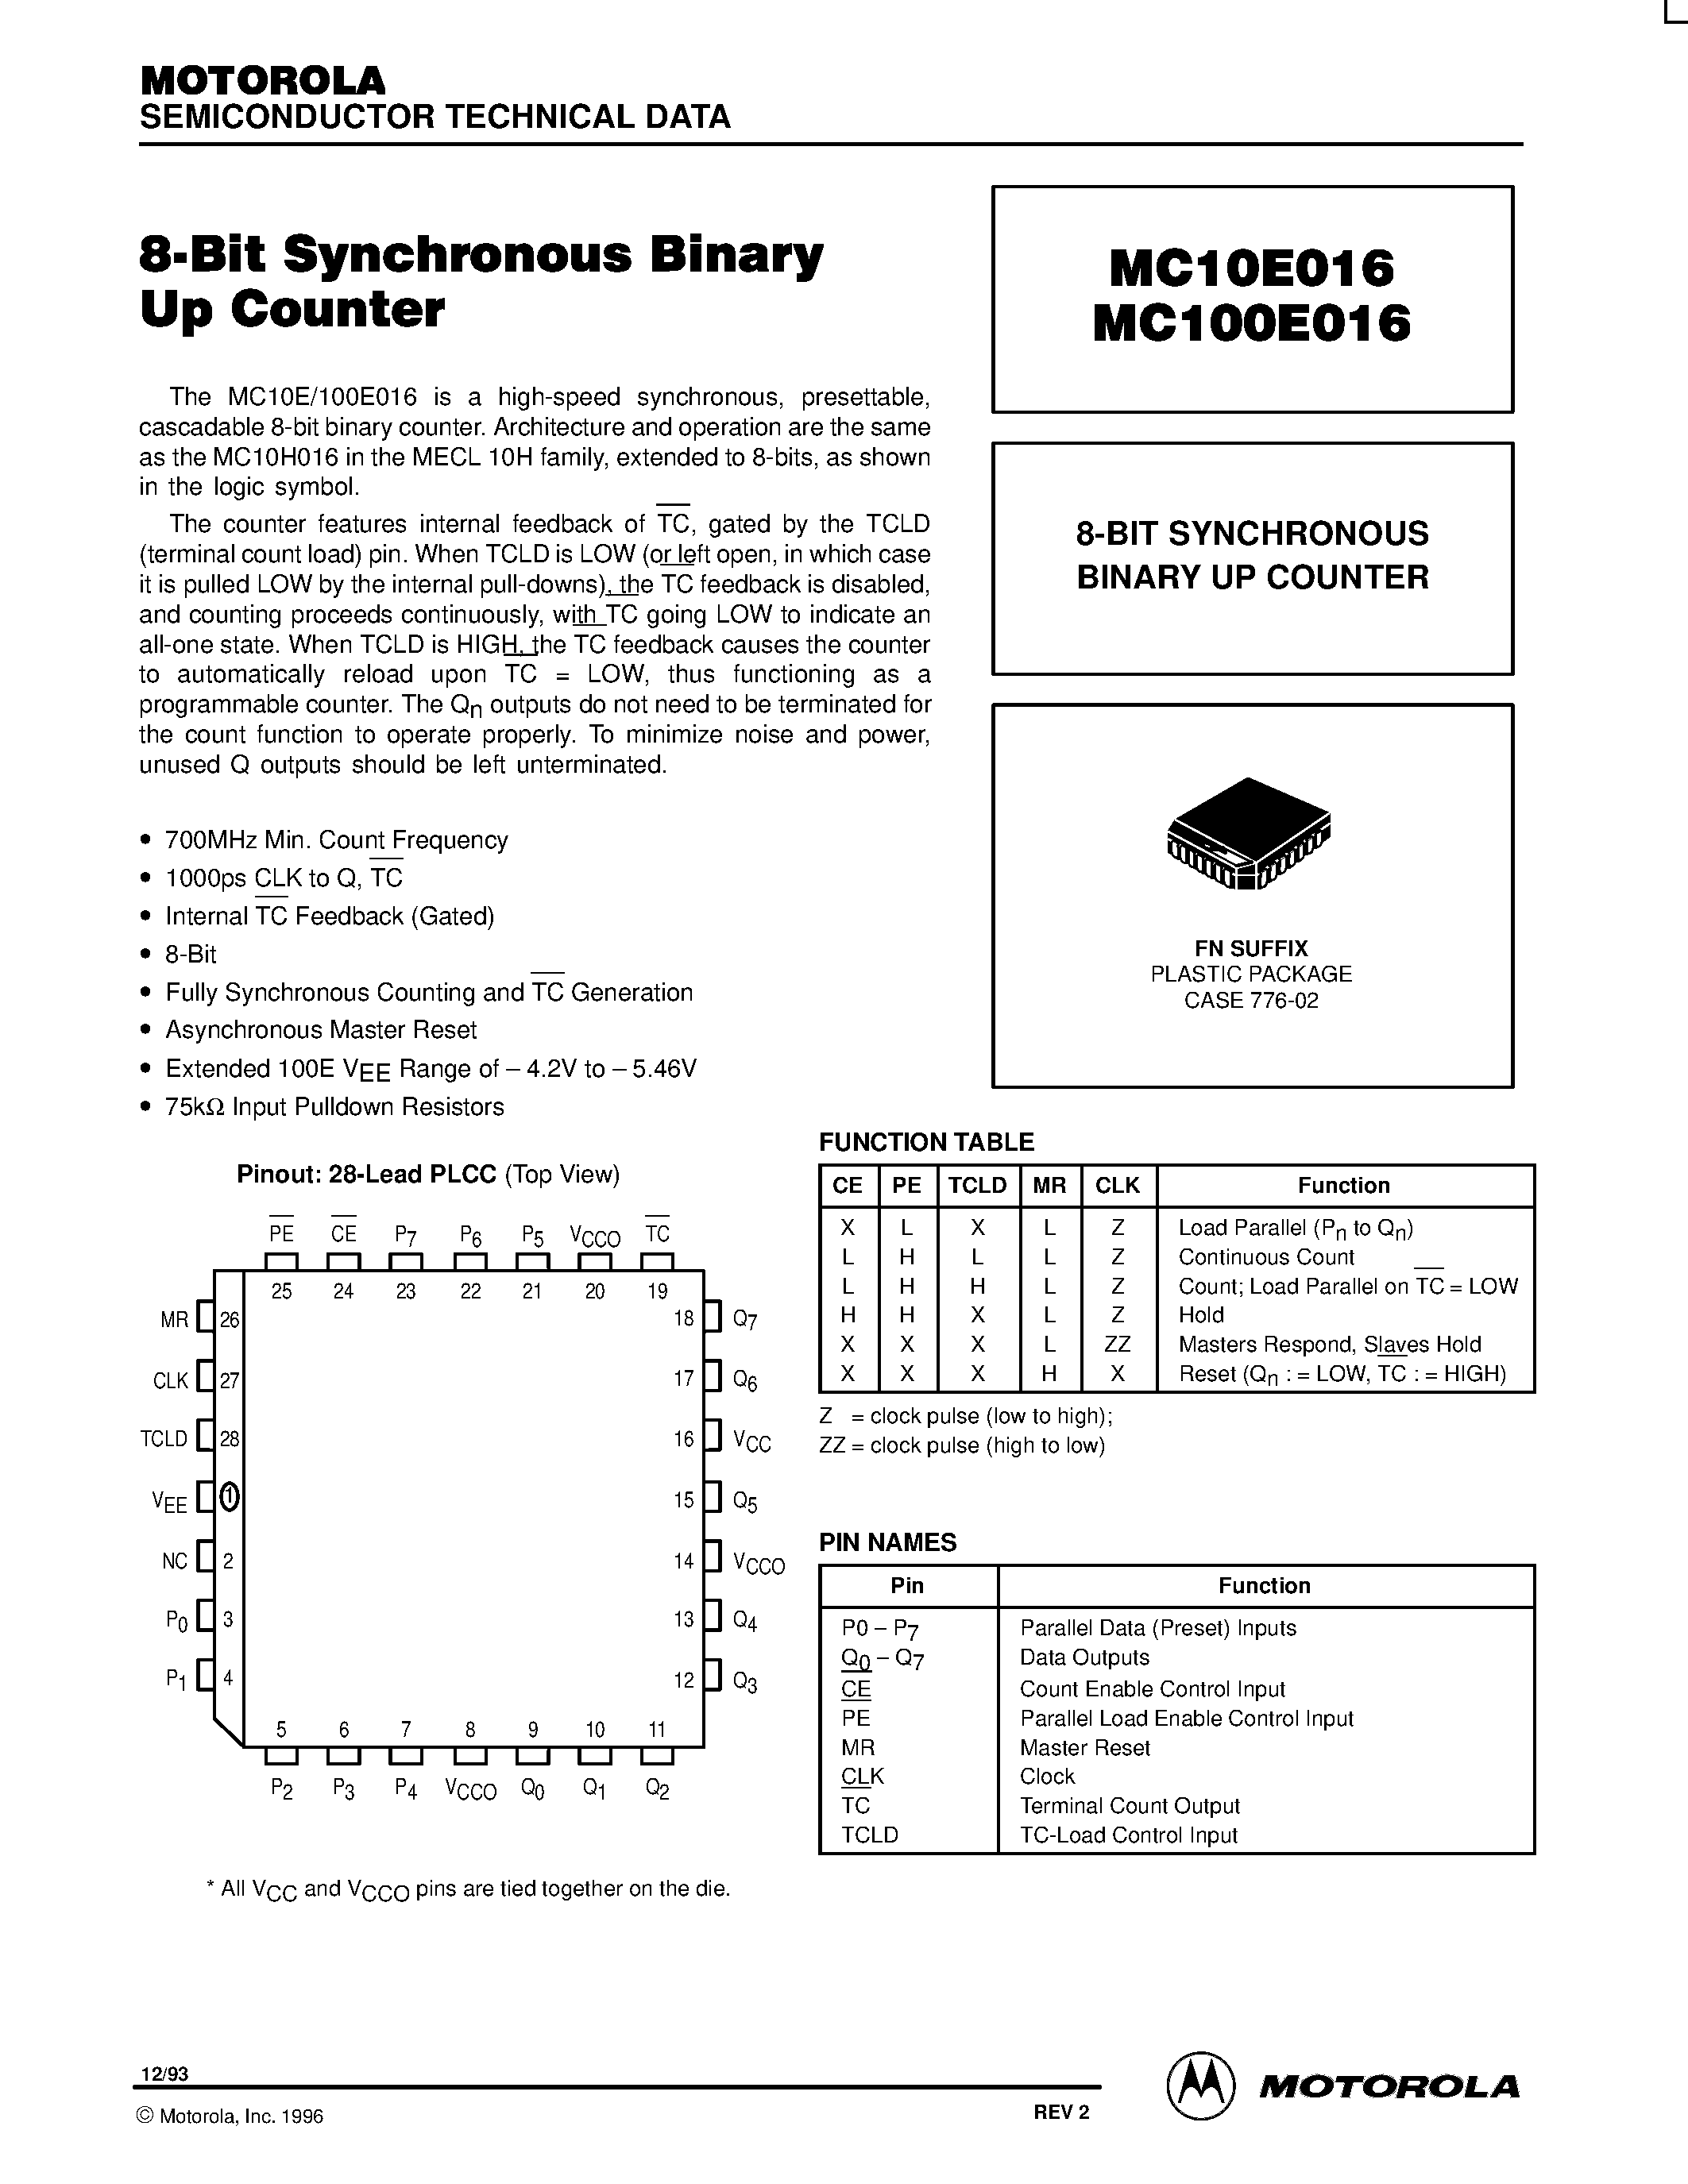 Datasheet MC100E016FN - 8-Bit Synchronous Binary Up Counter page 1